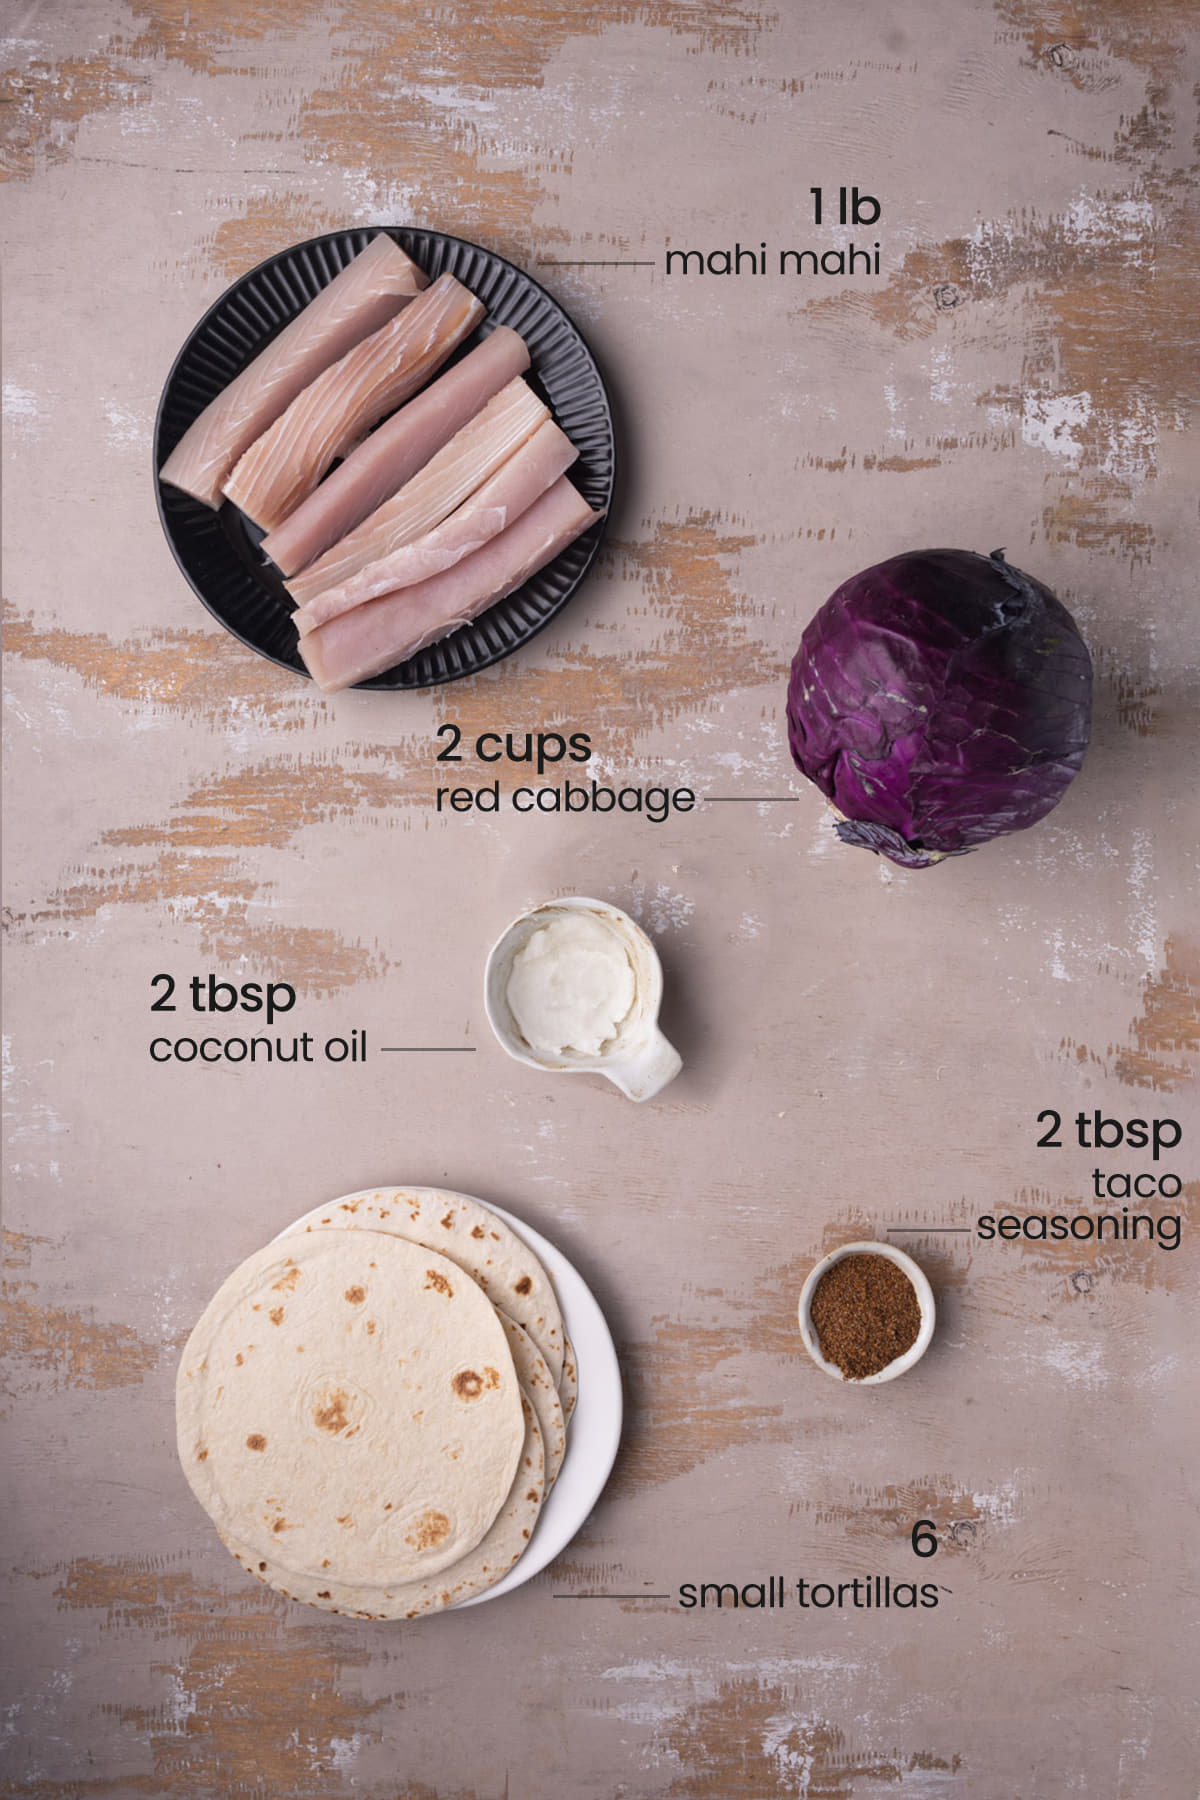 ingredients for mahi-mahi tacos, including mahi-mahi, taco seasoning, tortillas, red cabbage, and coconut oil